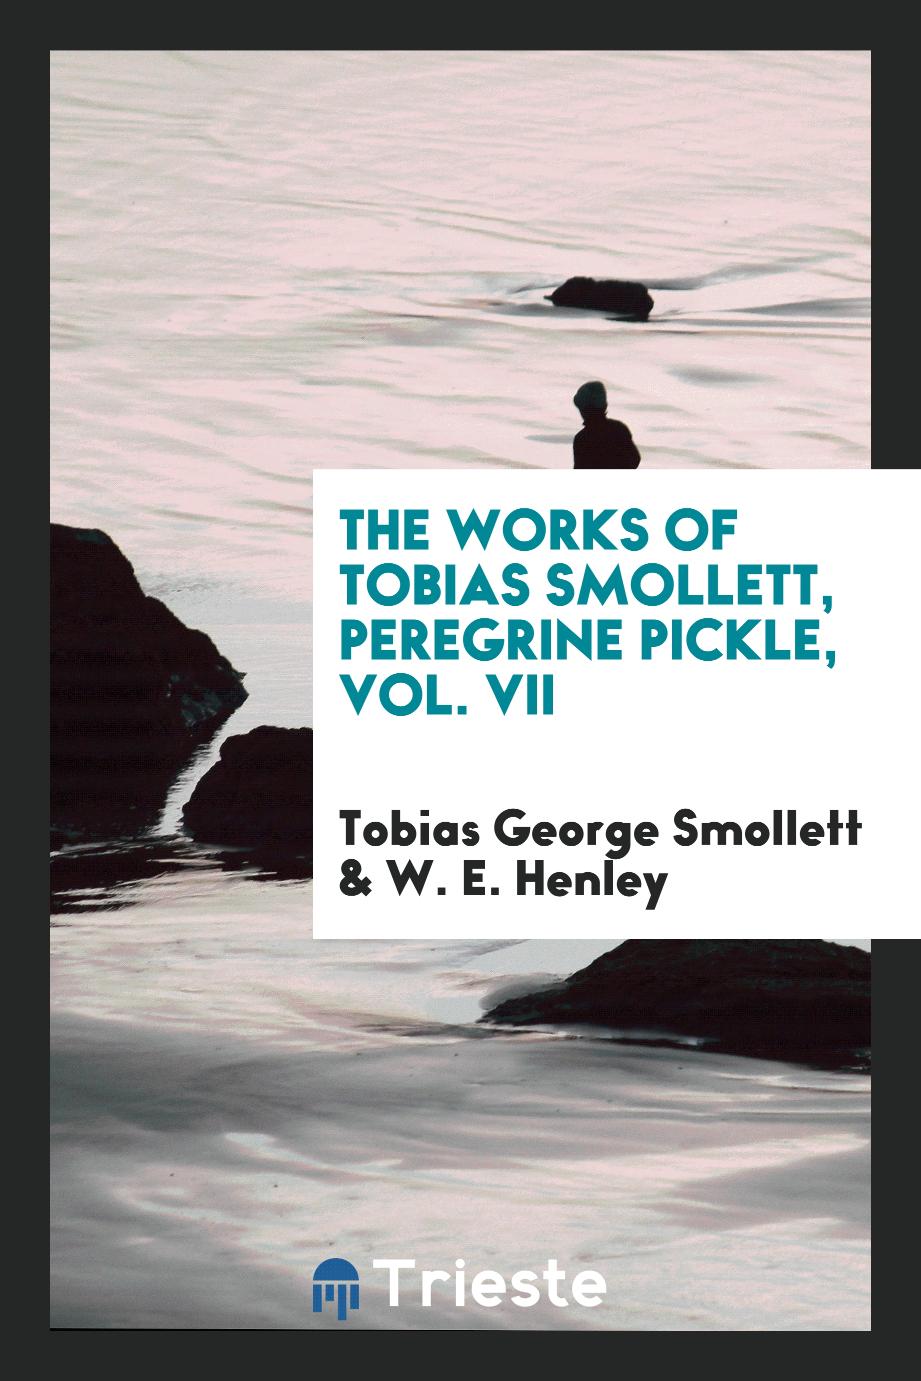 The Works of Tobias Smollett, Peregrine Pickle, Vol. VII